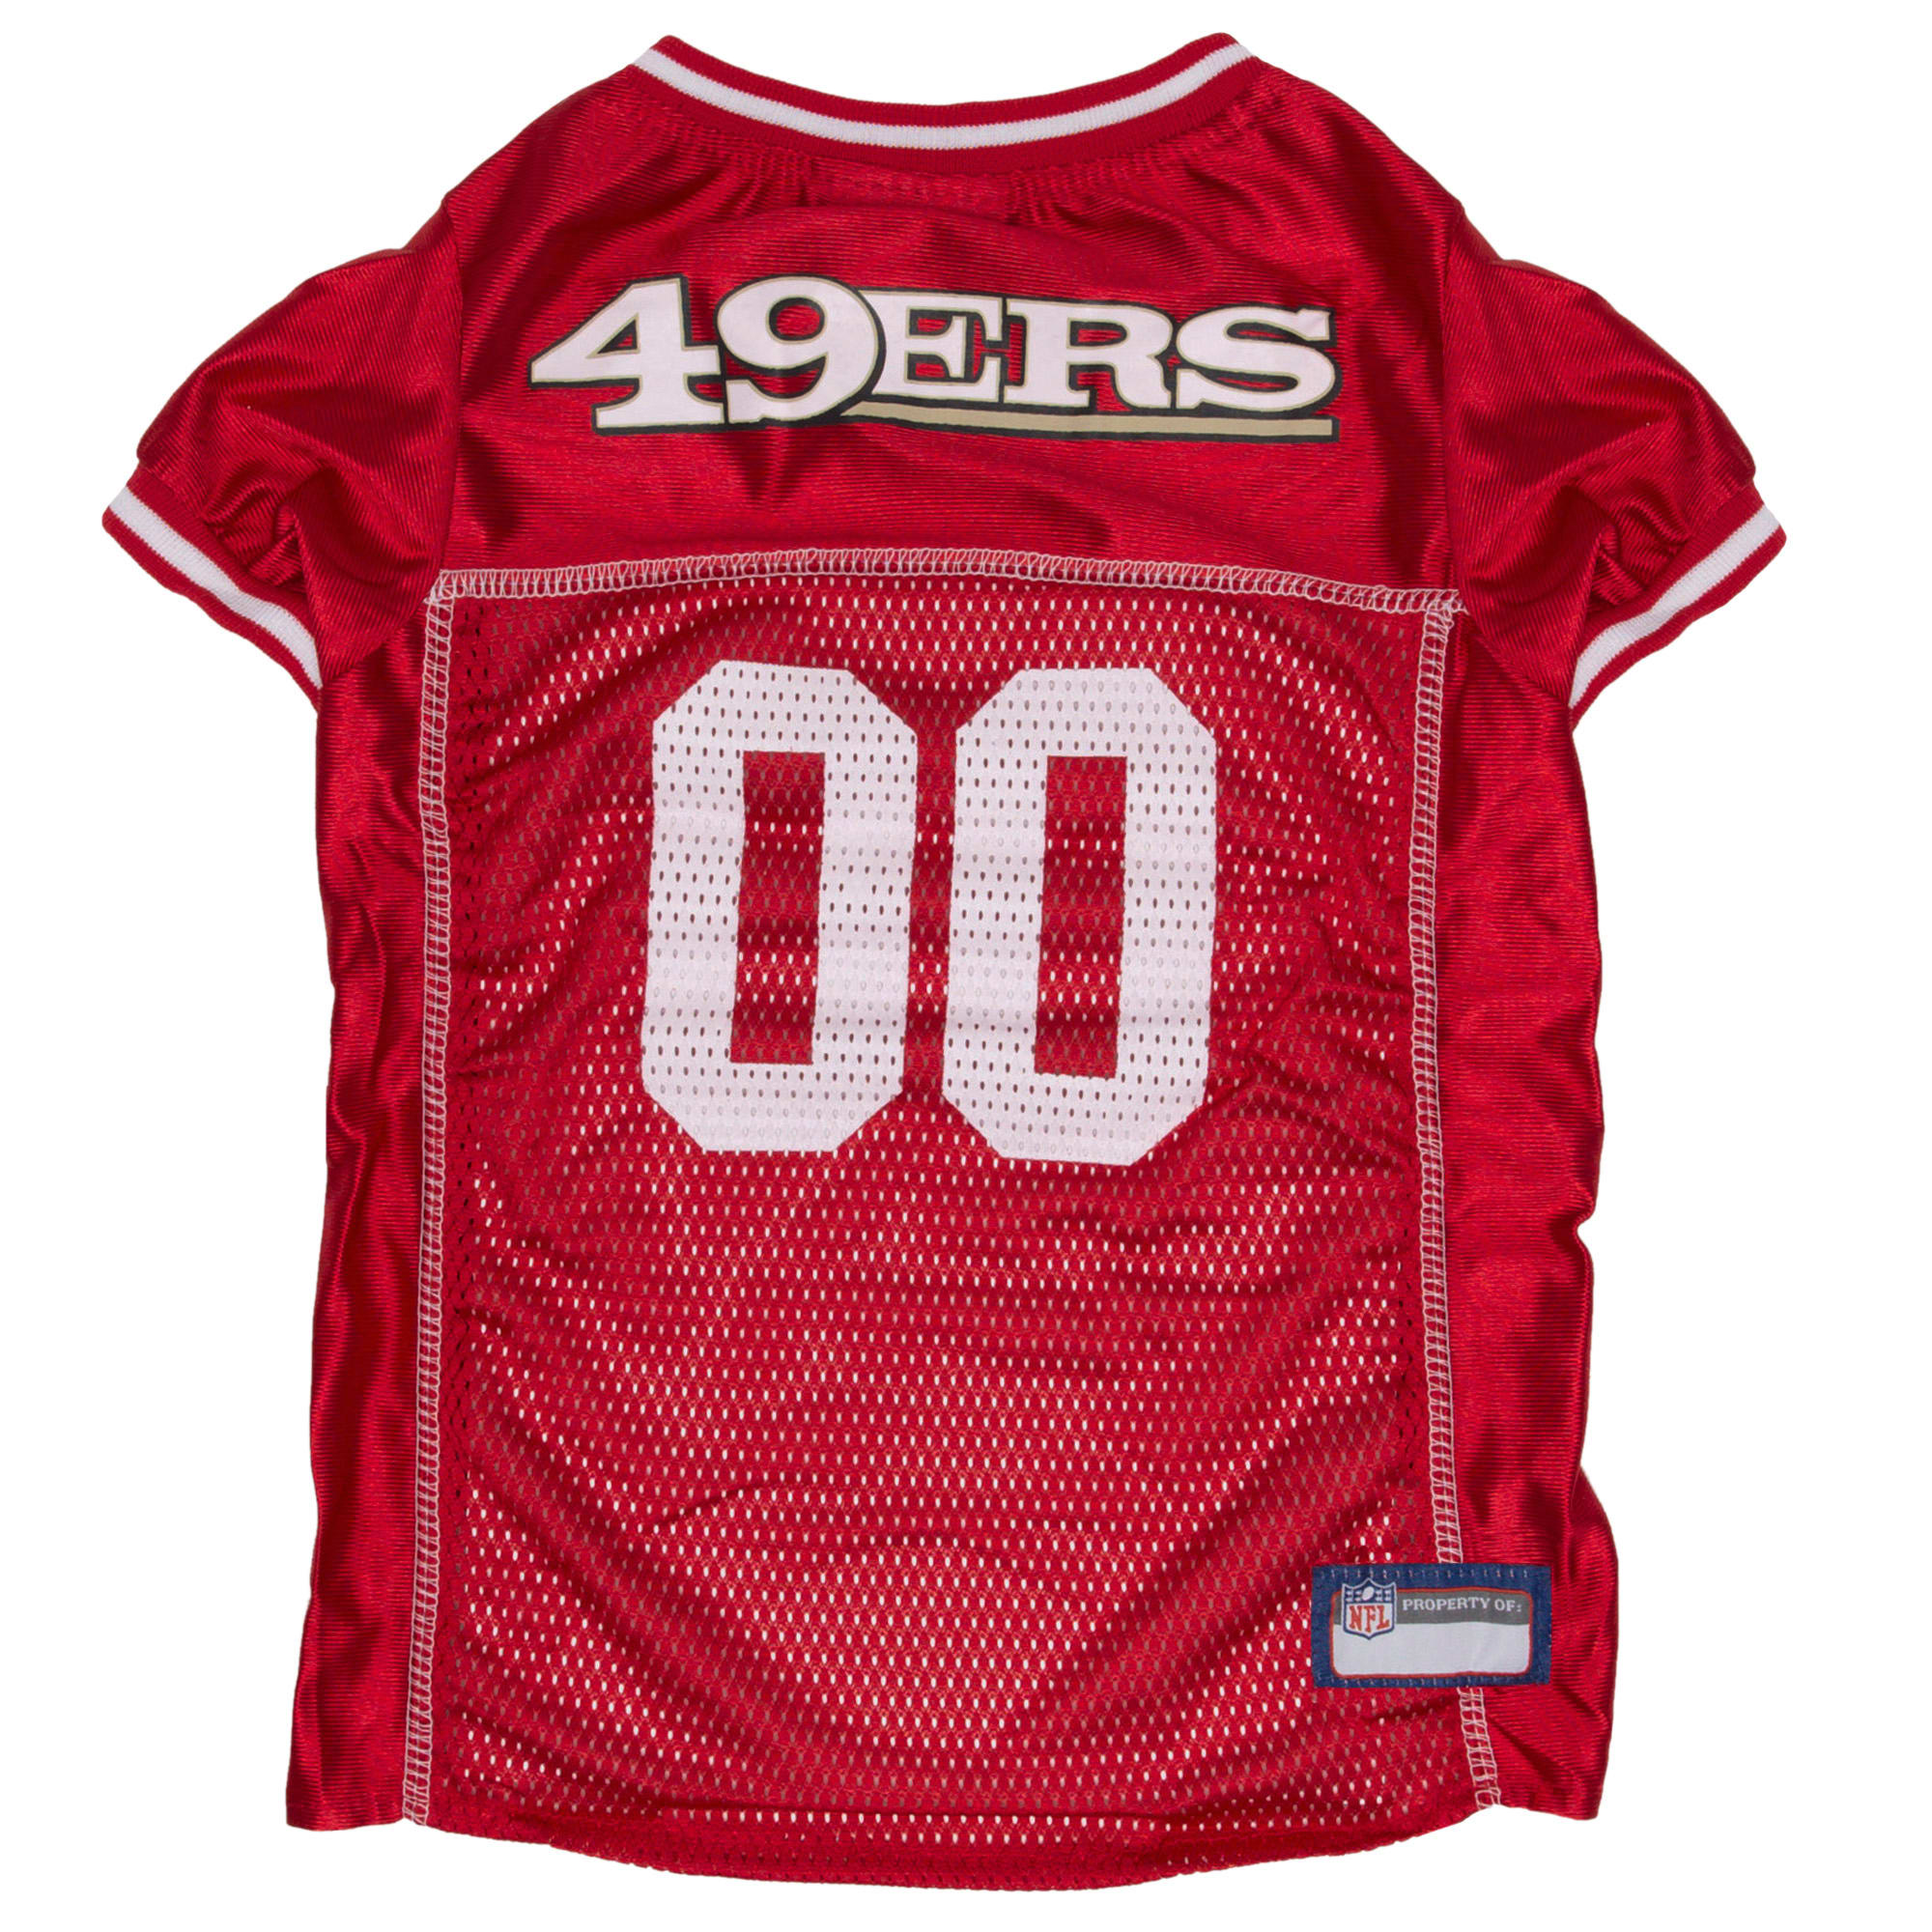 49ers jersey nfl